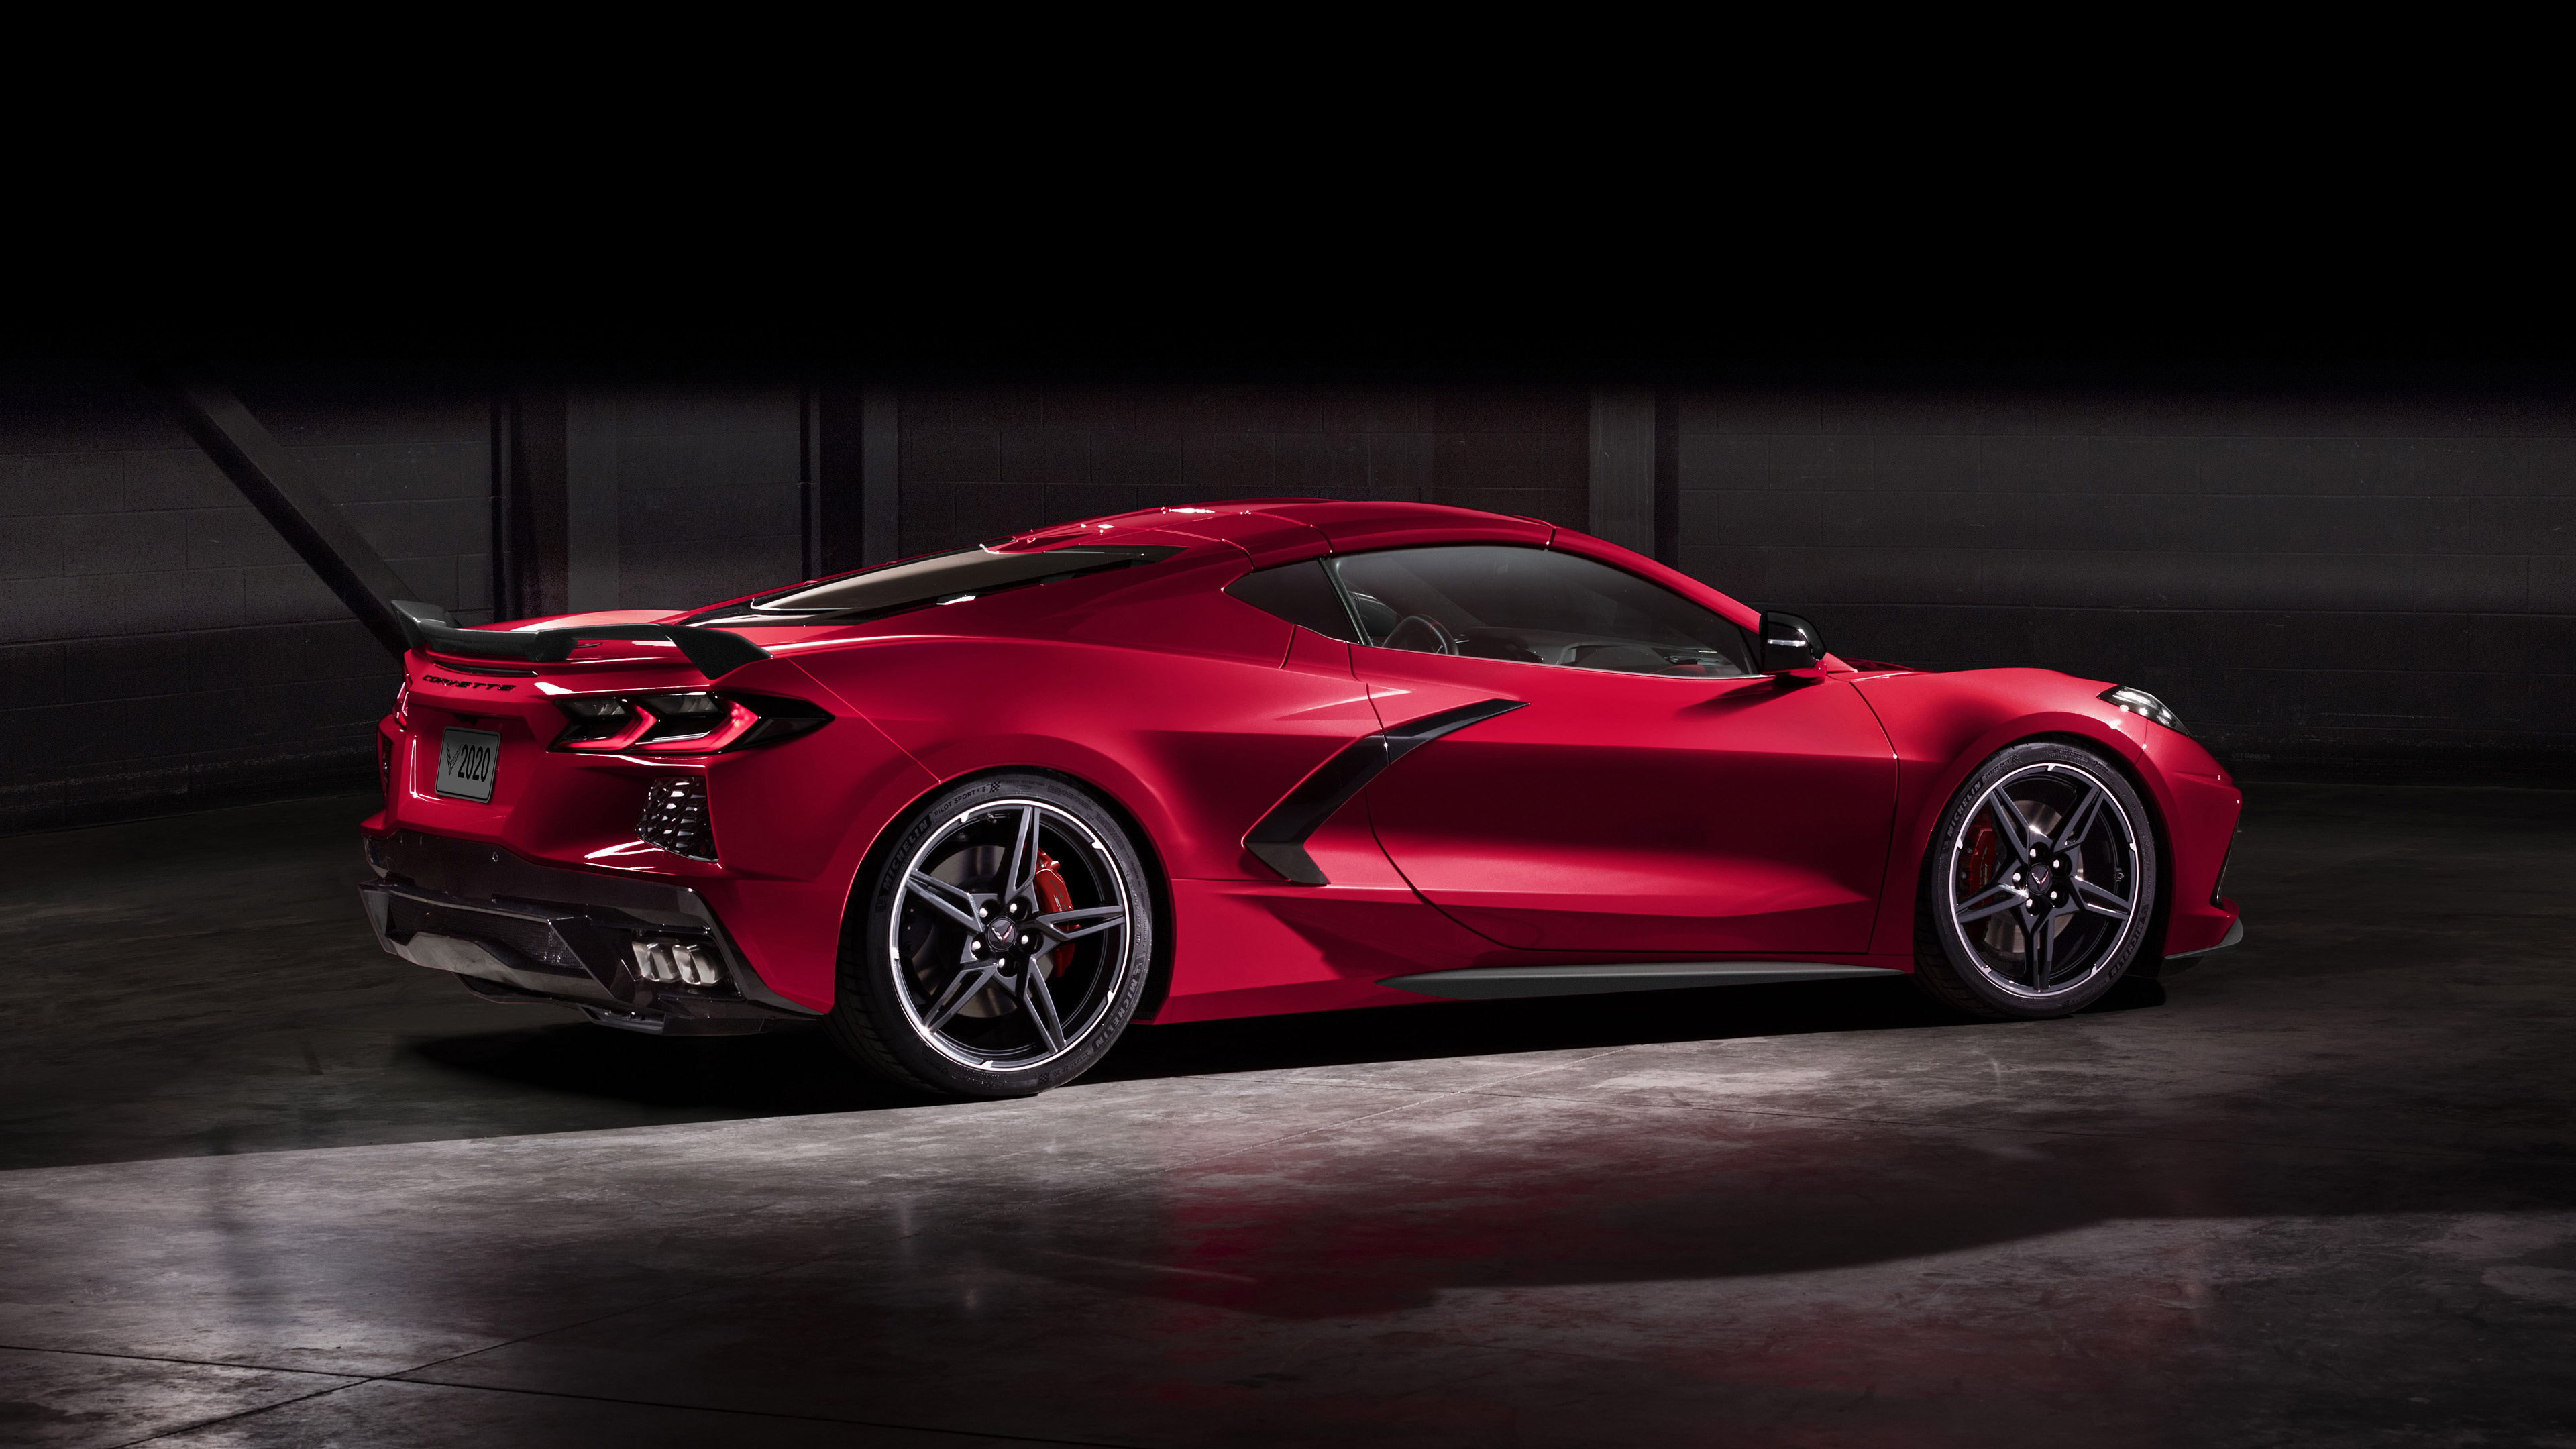 Corvette: C8 Stingray, The 2020 model, Aggressive rear view, Racing rims, Improved aerodynamics. 3840x2160 4K Wallpaper.